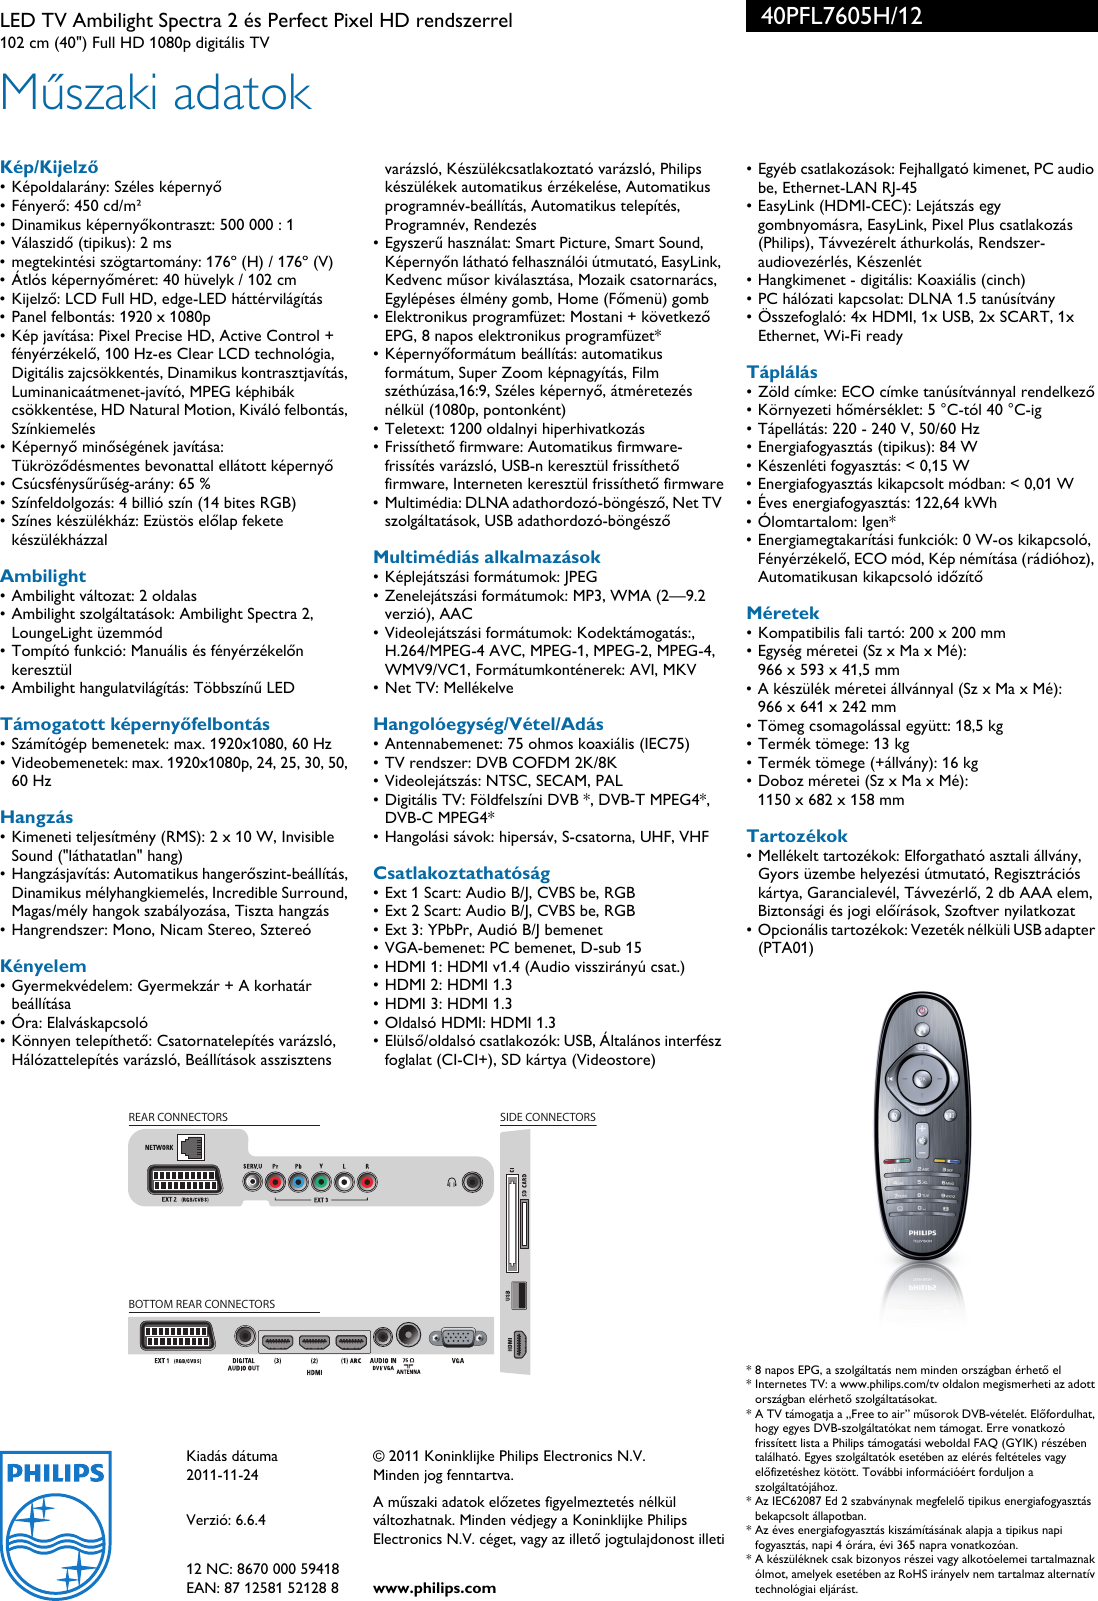 Page 3 of 3 - Philips 40PFL7605H/12 LED TV Ambilight Spectra 2 és Perfect Pixel HD Rendszerrel User Manual Kiadvány 40pfl7605h 12 Pss Hunhu